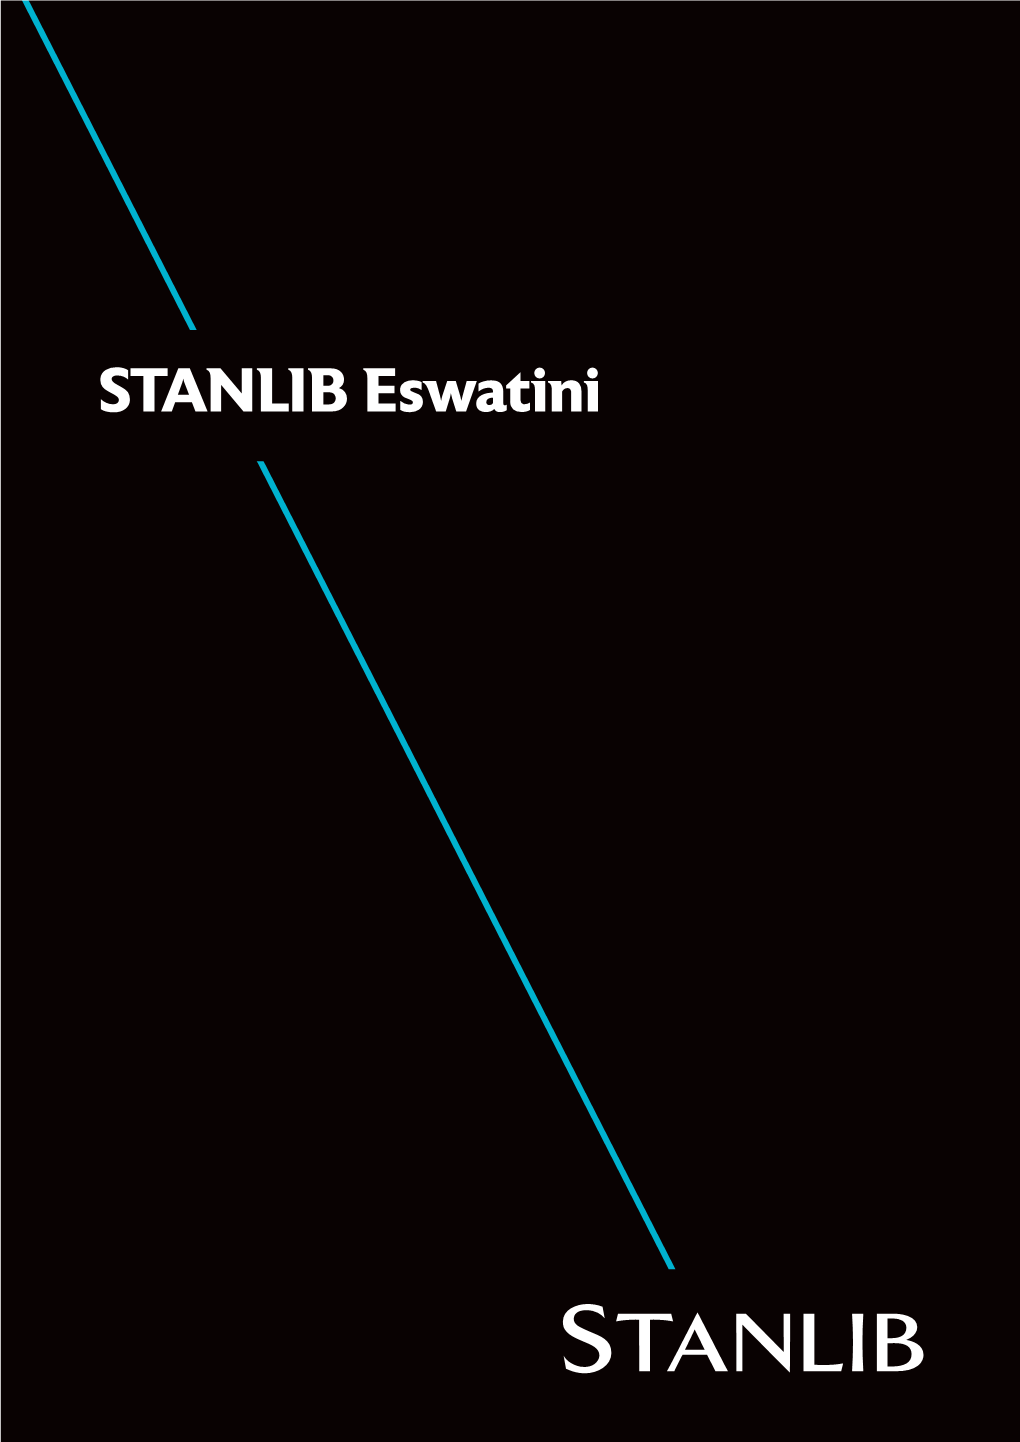 STANLIB Eswatini